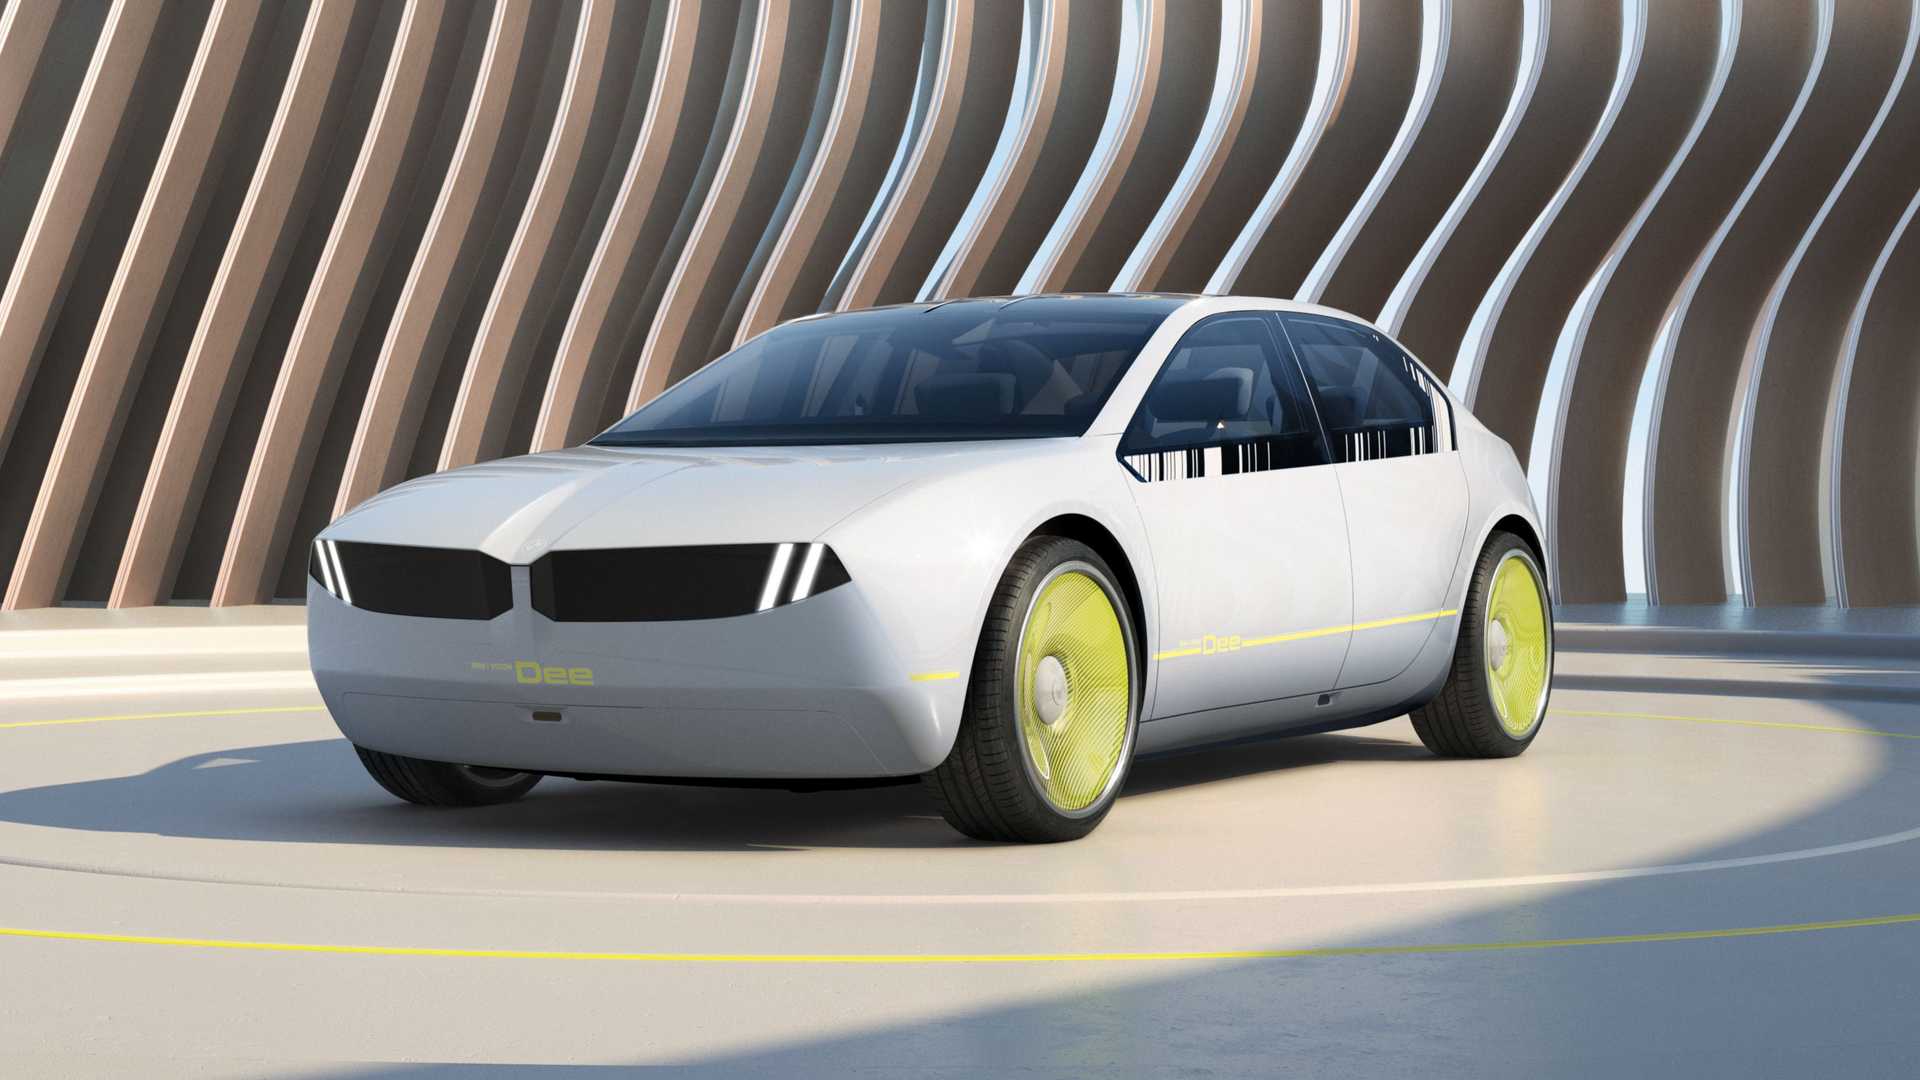 BMW i Vision Dee Concept